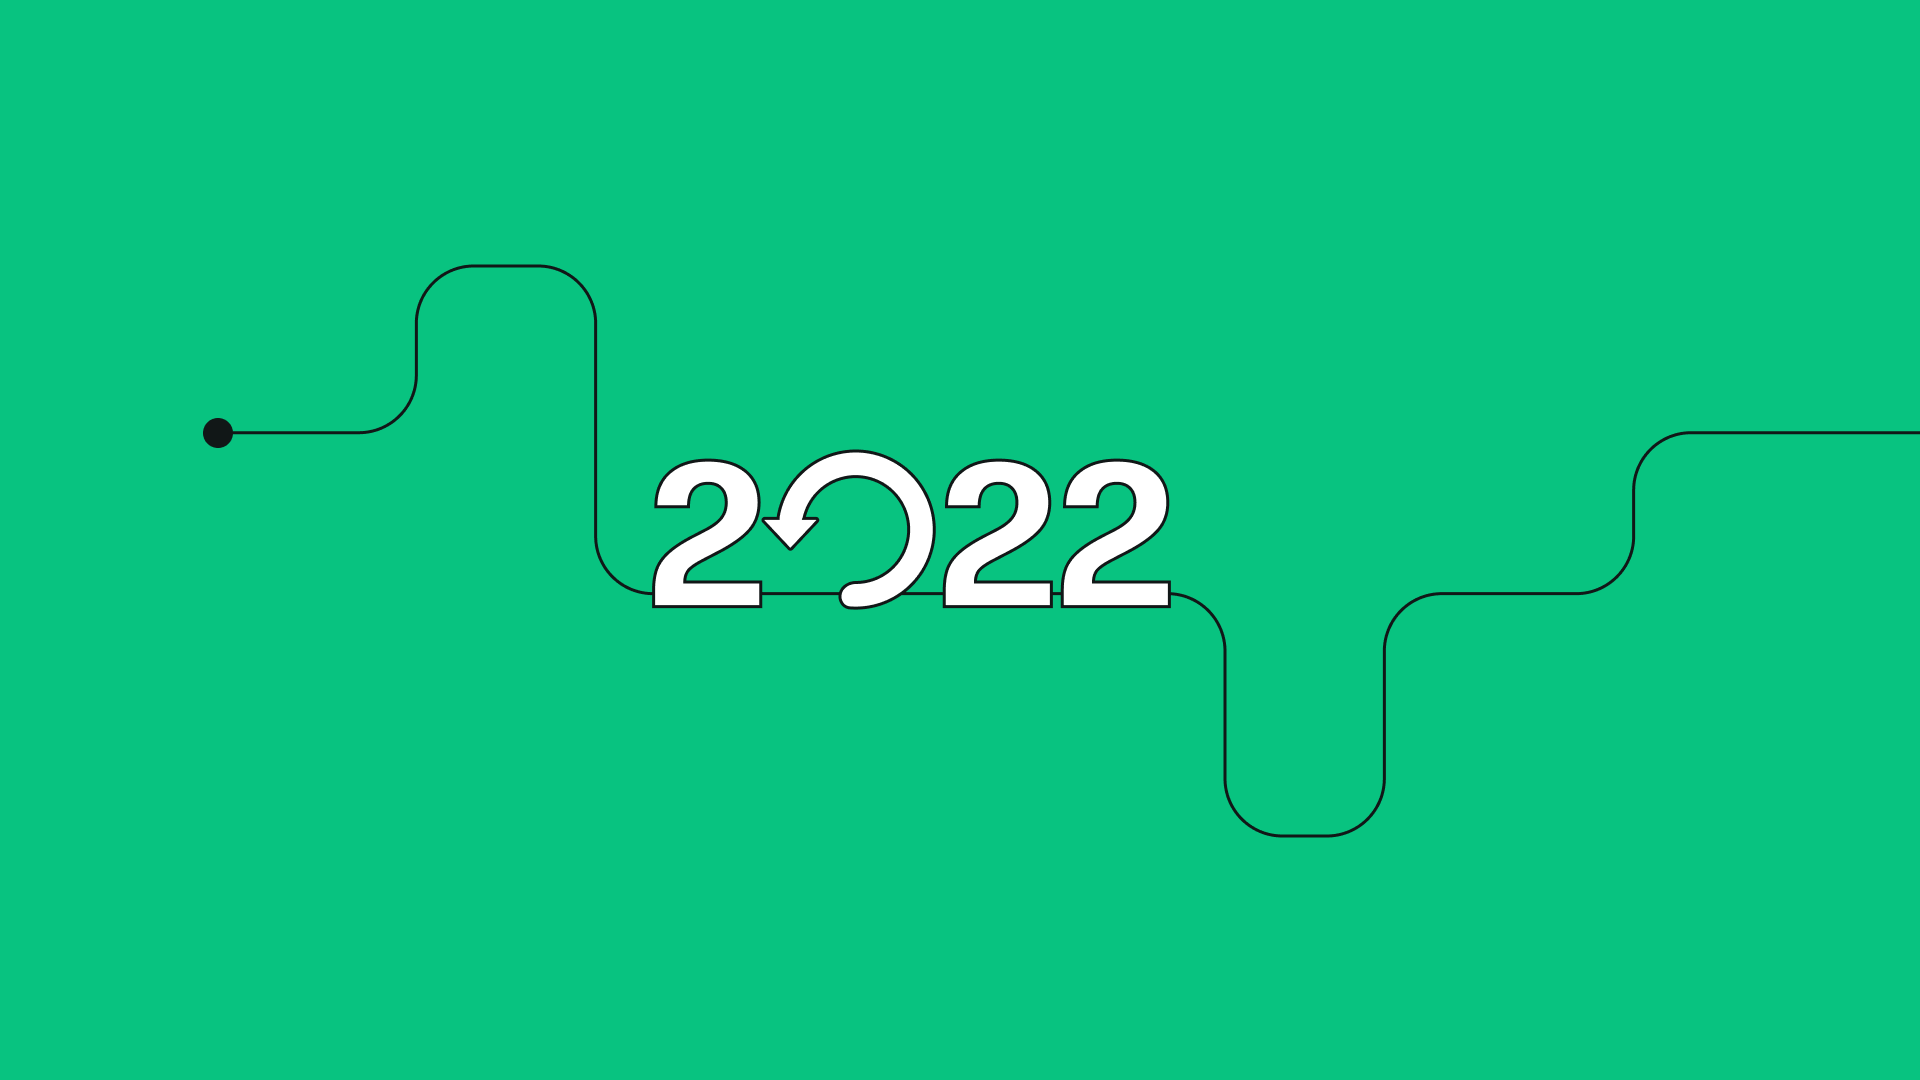 Vectornator Rewind: 2022